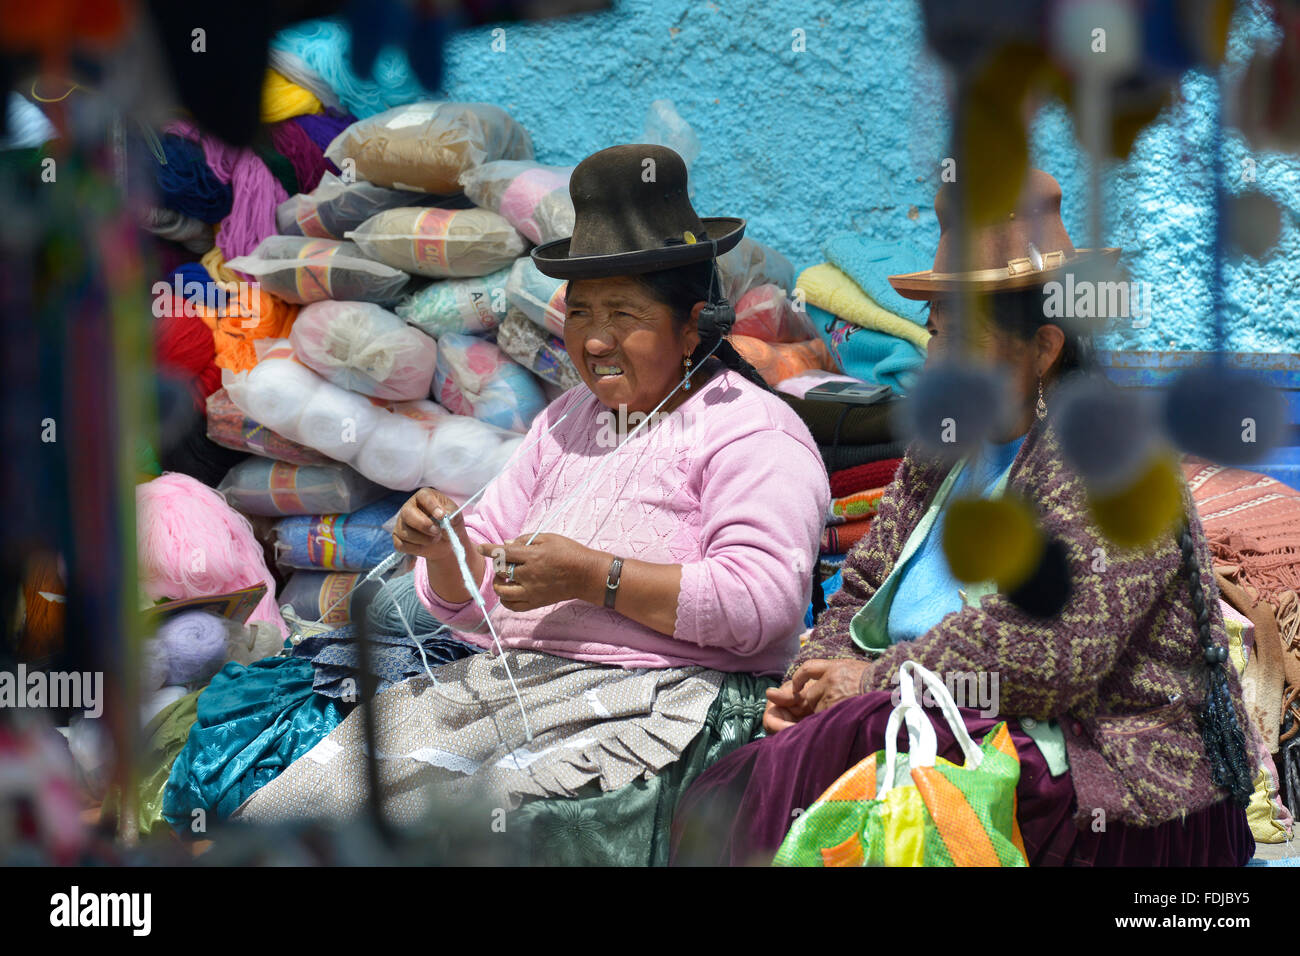 Chivay, Peru- September 2, 2015: Unidentified Quechua people in Chivay market in Arequipa region, Peru. Stock Photo